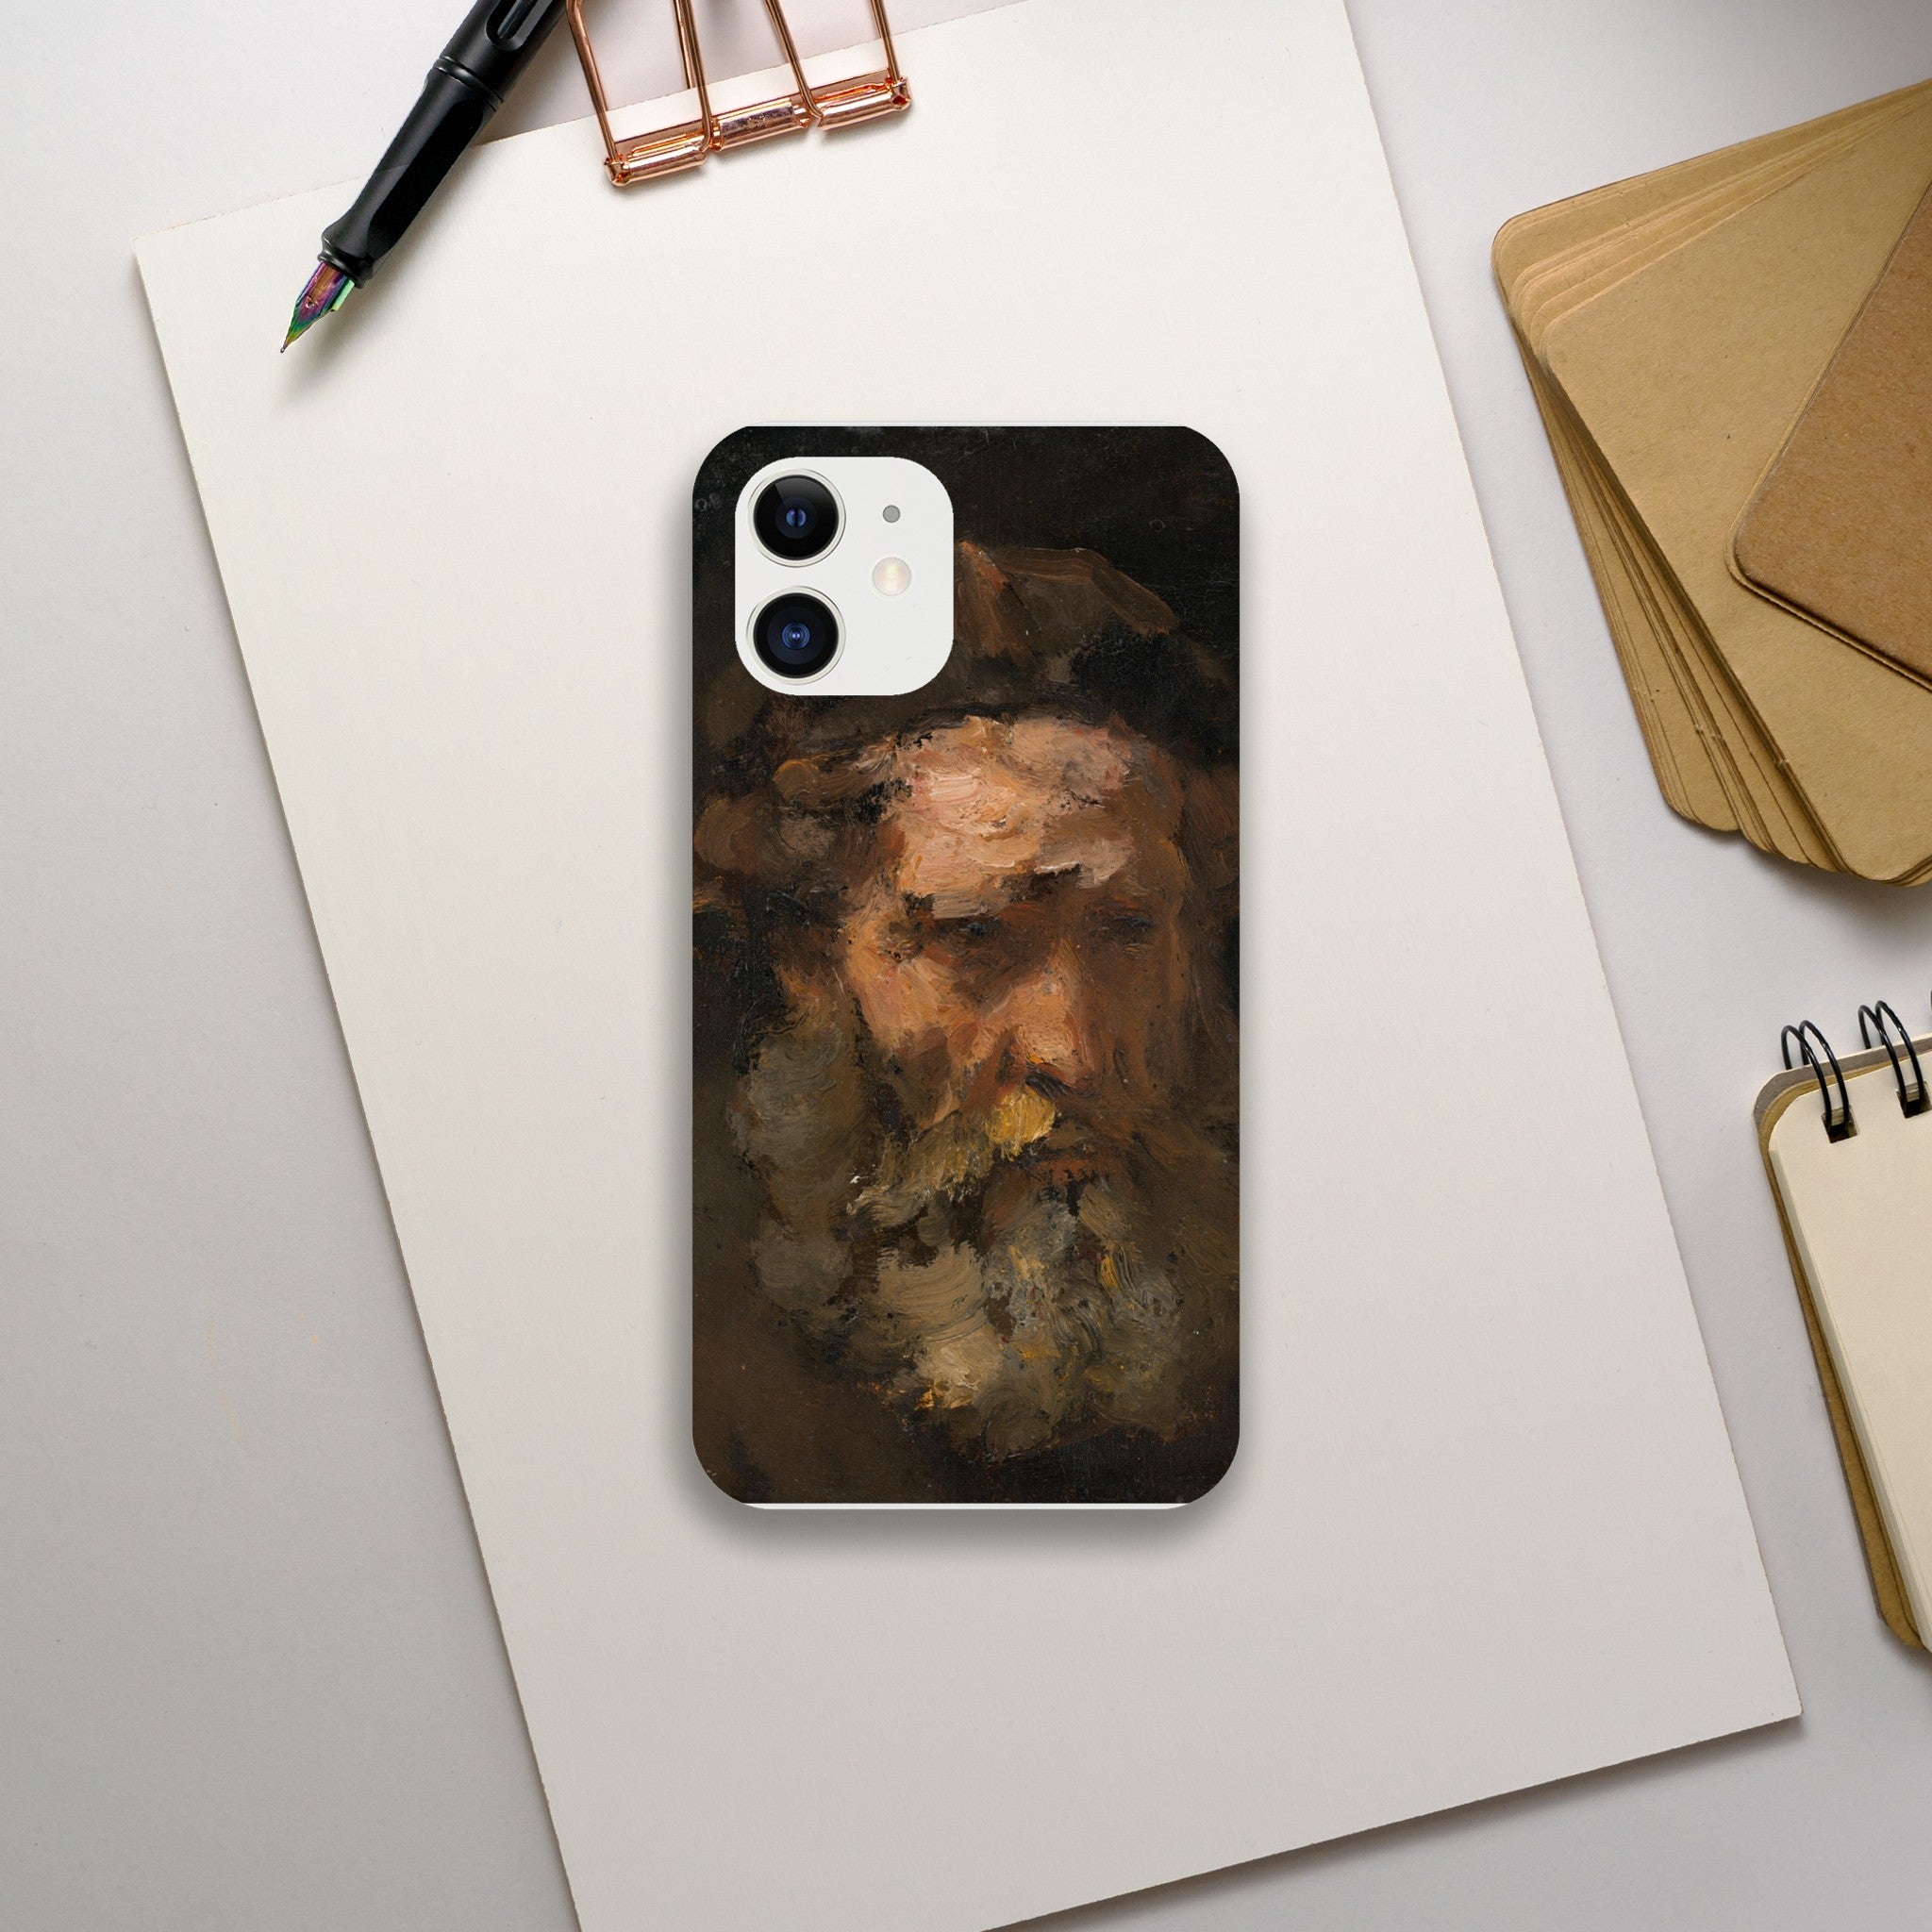 Painted Man I-phone Case - Slim case